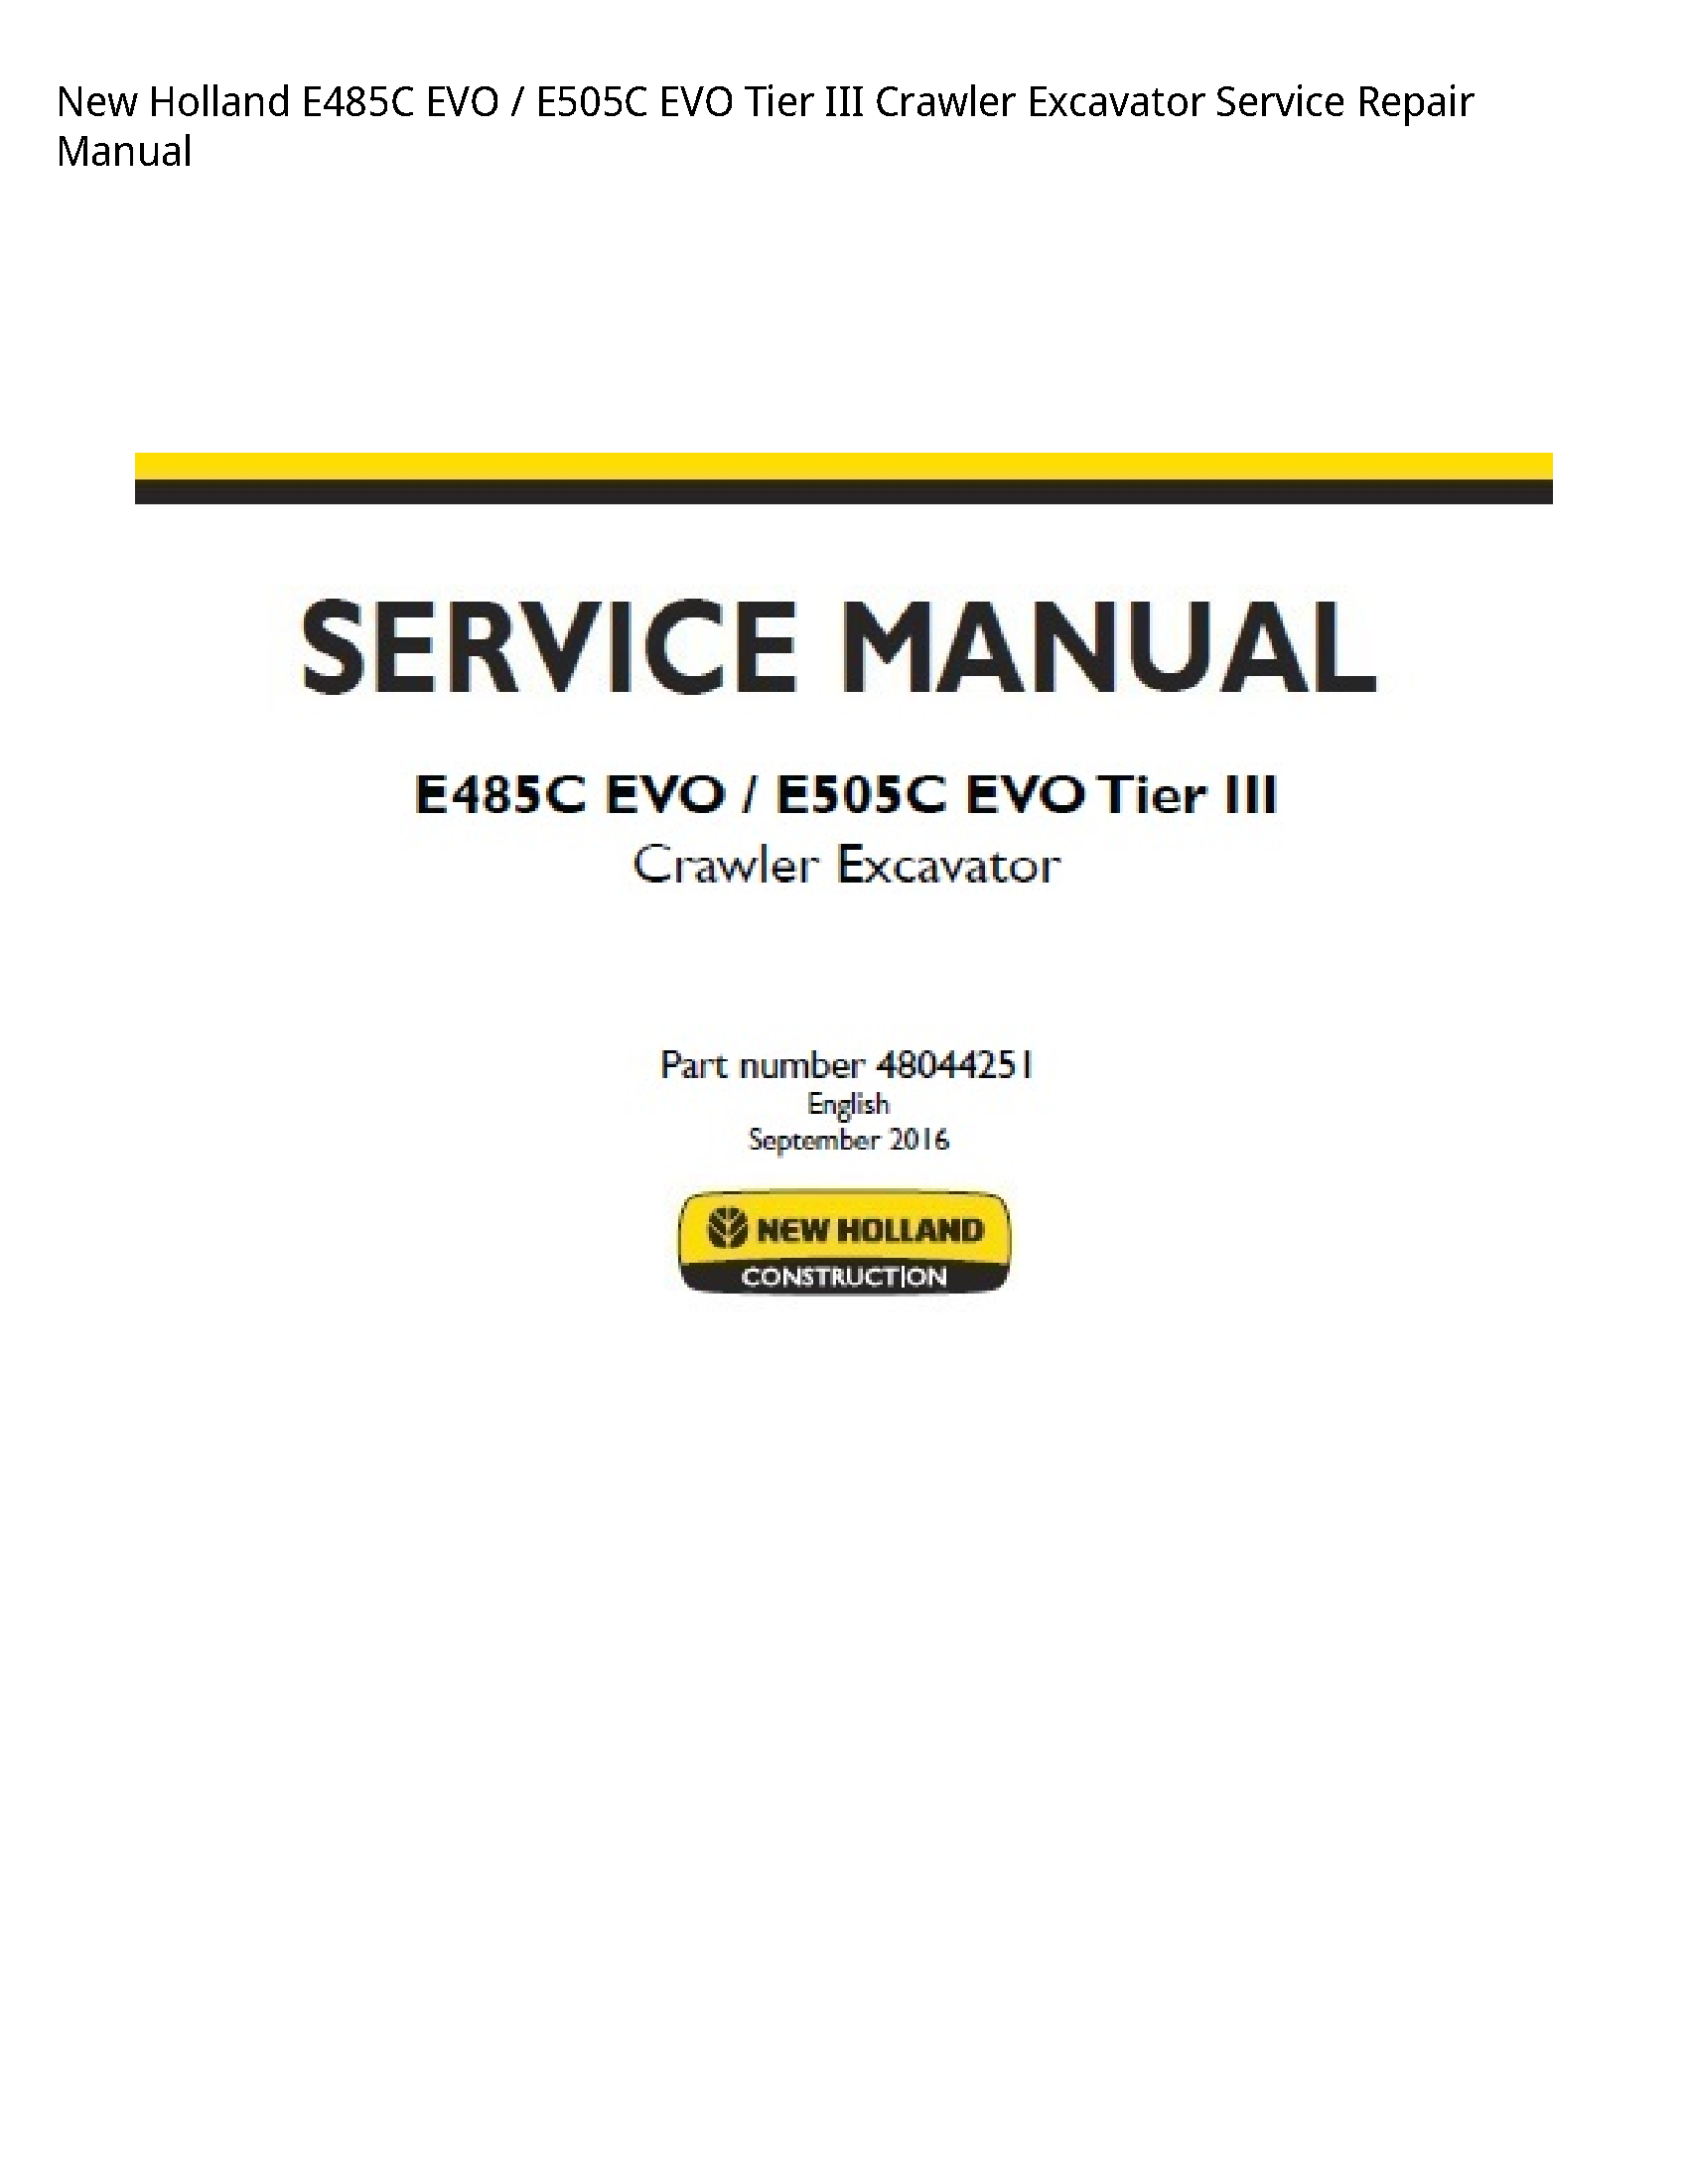 New Holland E485C EVO EVO Tier III Crawler Excavator manual